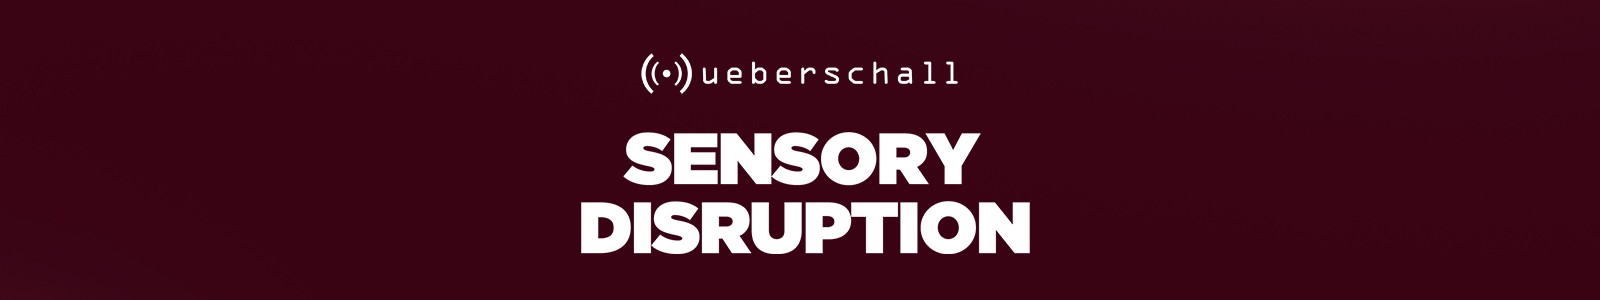 Sensory Disruption by Ueberschall